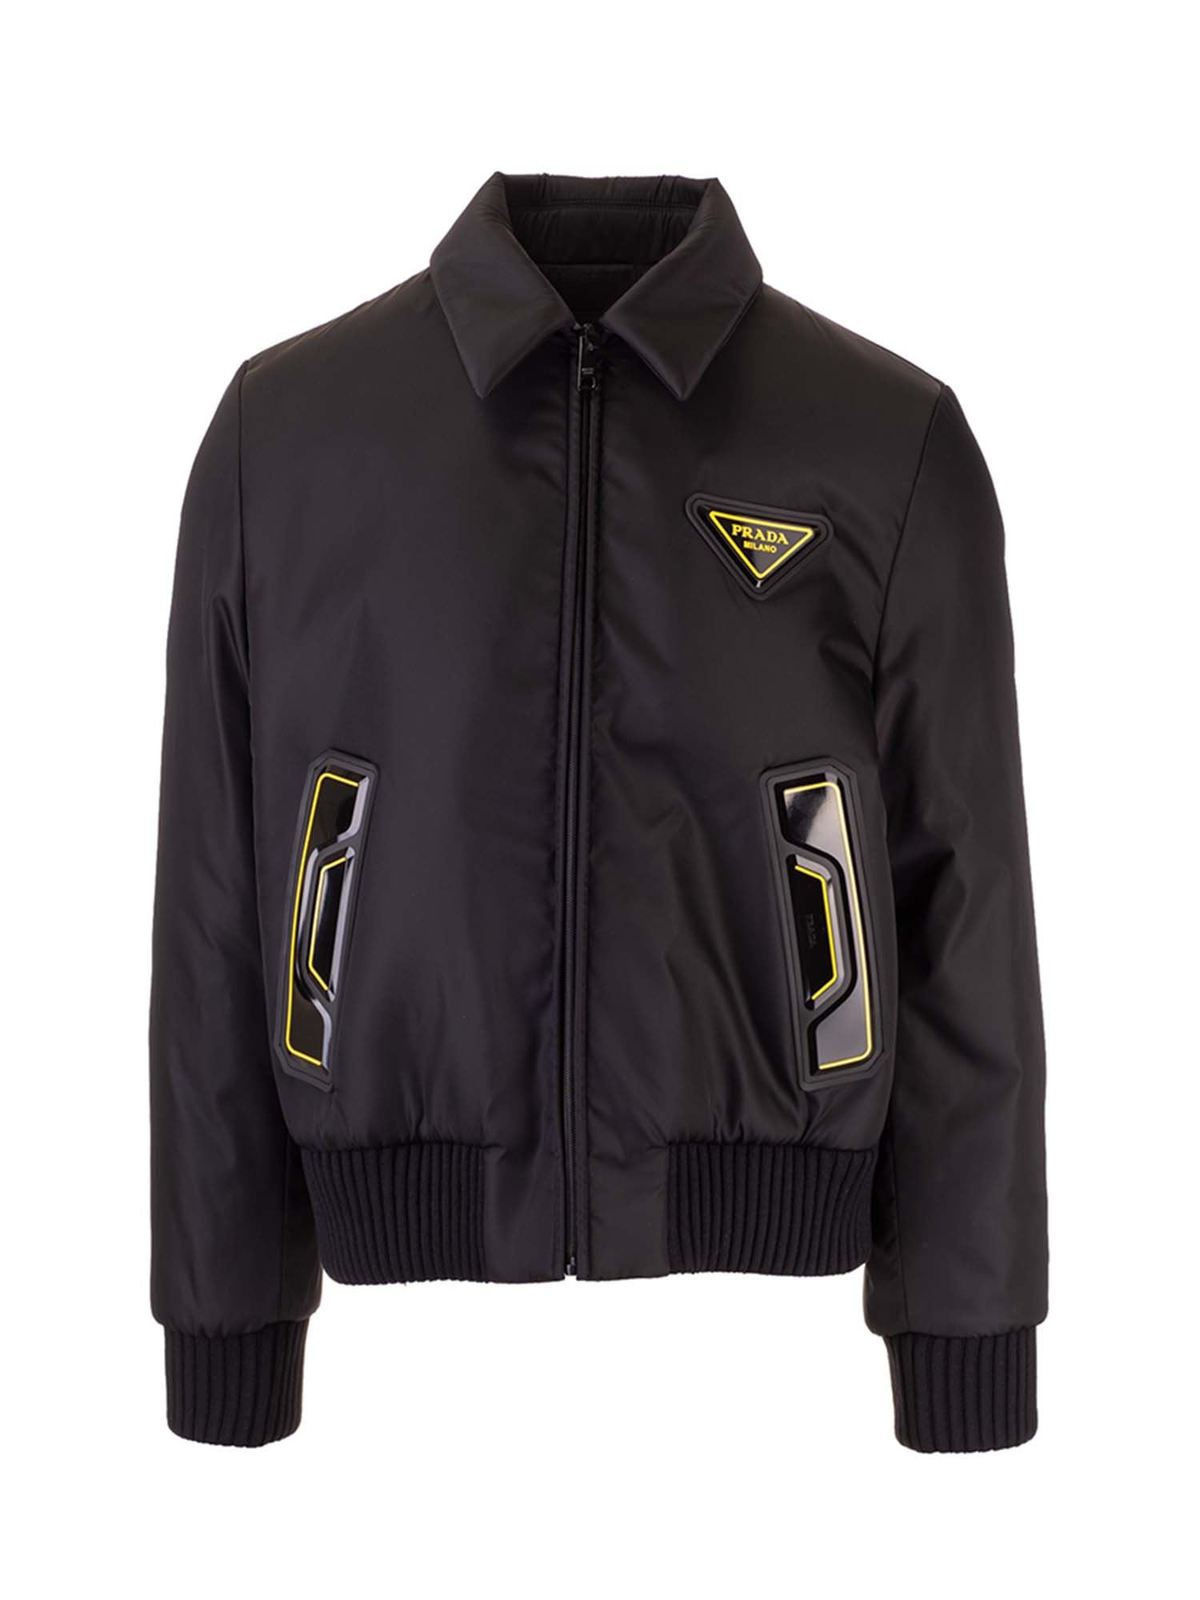 Prada - Logo patch jacket in black - casual jackets - SGB630XVZF0002